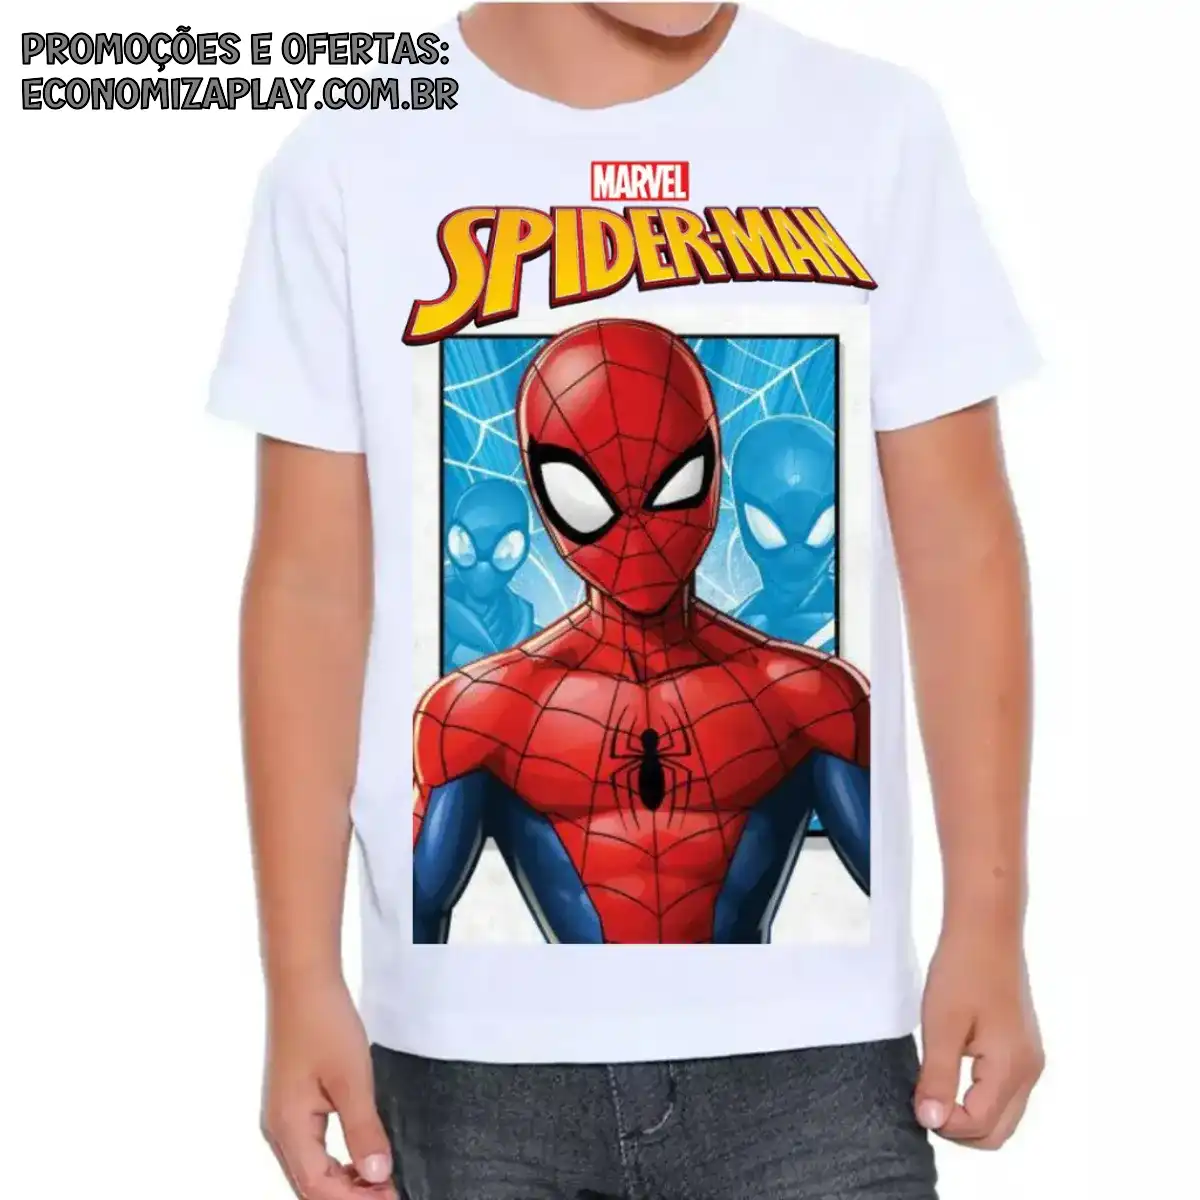 Camisacamiseta Infantil e adulta Homemaranha Spiderman Tshirt Blusa unissex homem aranha Envio imediato